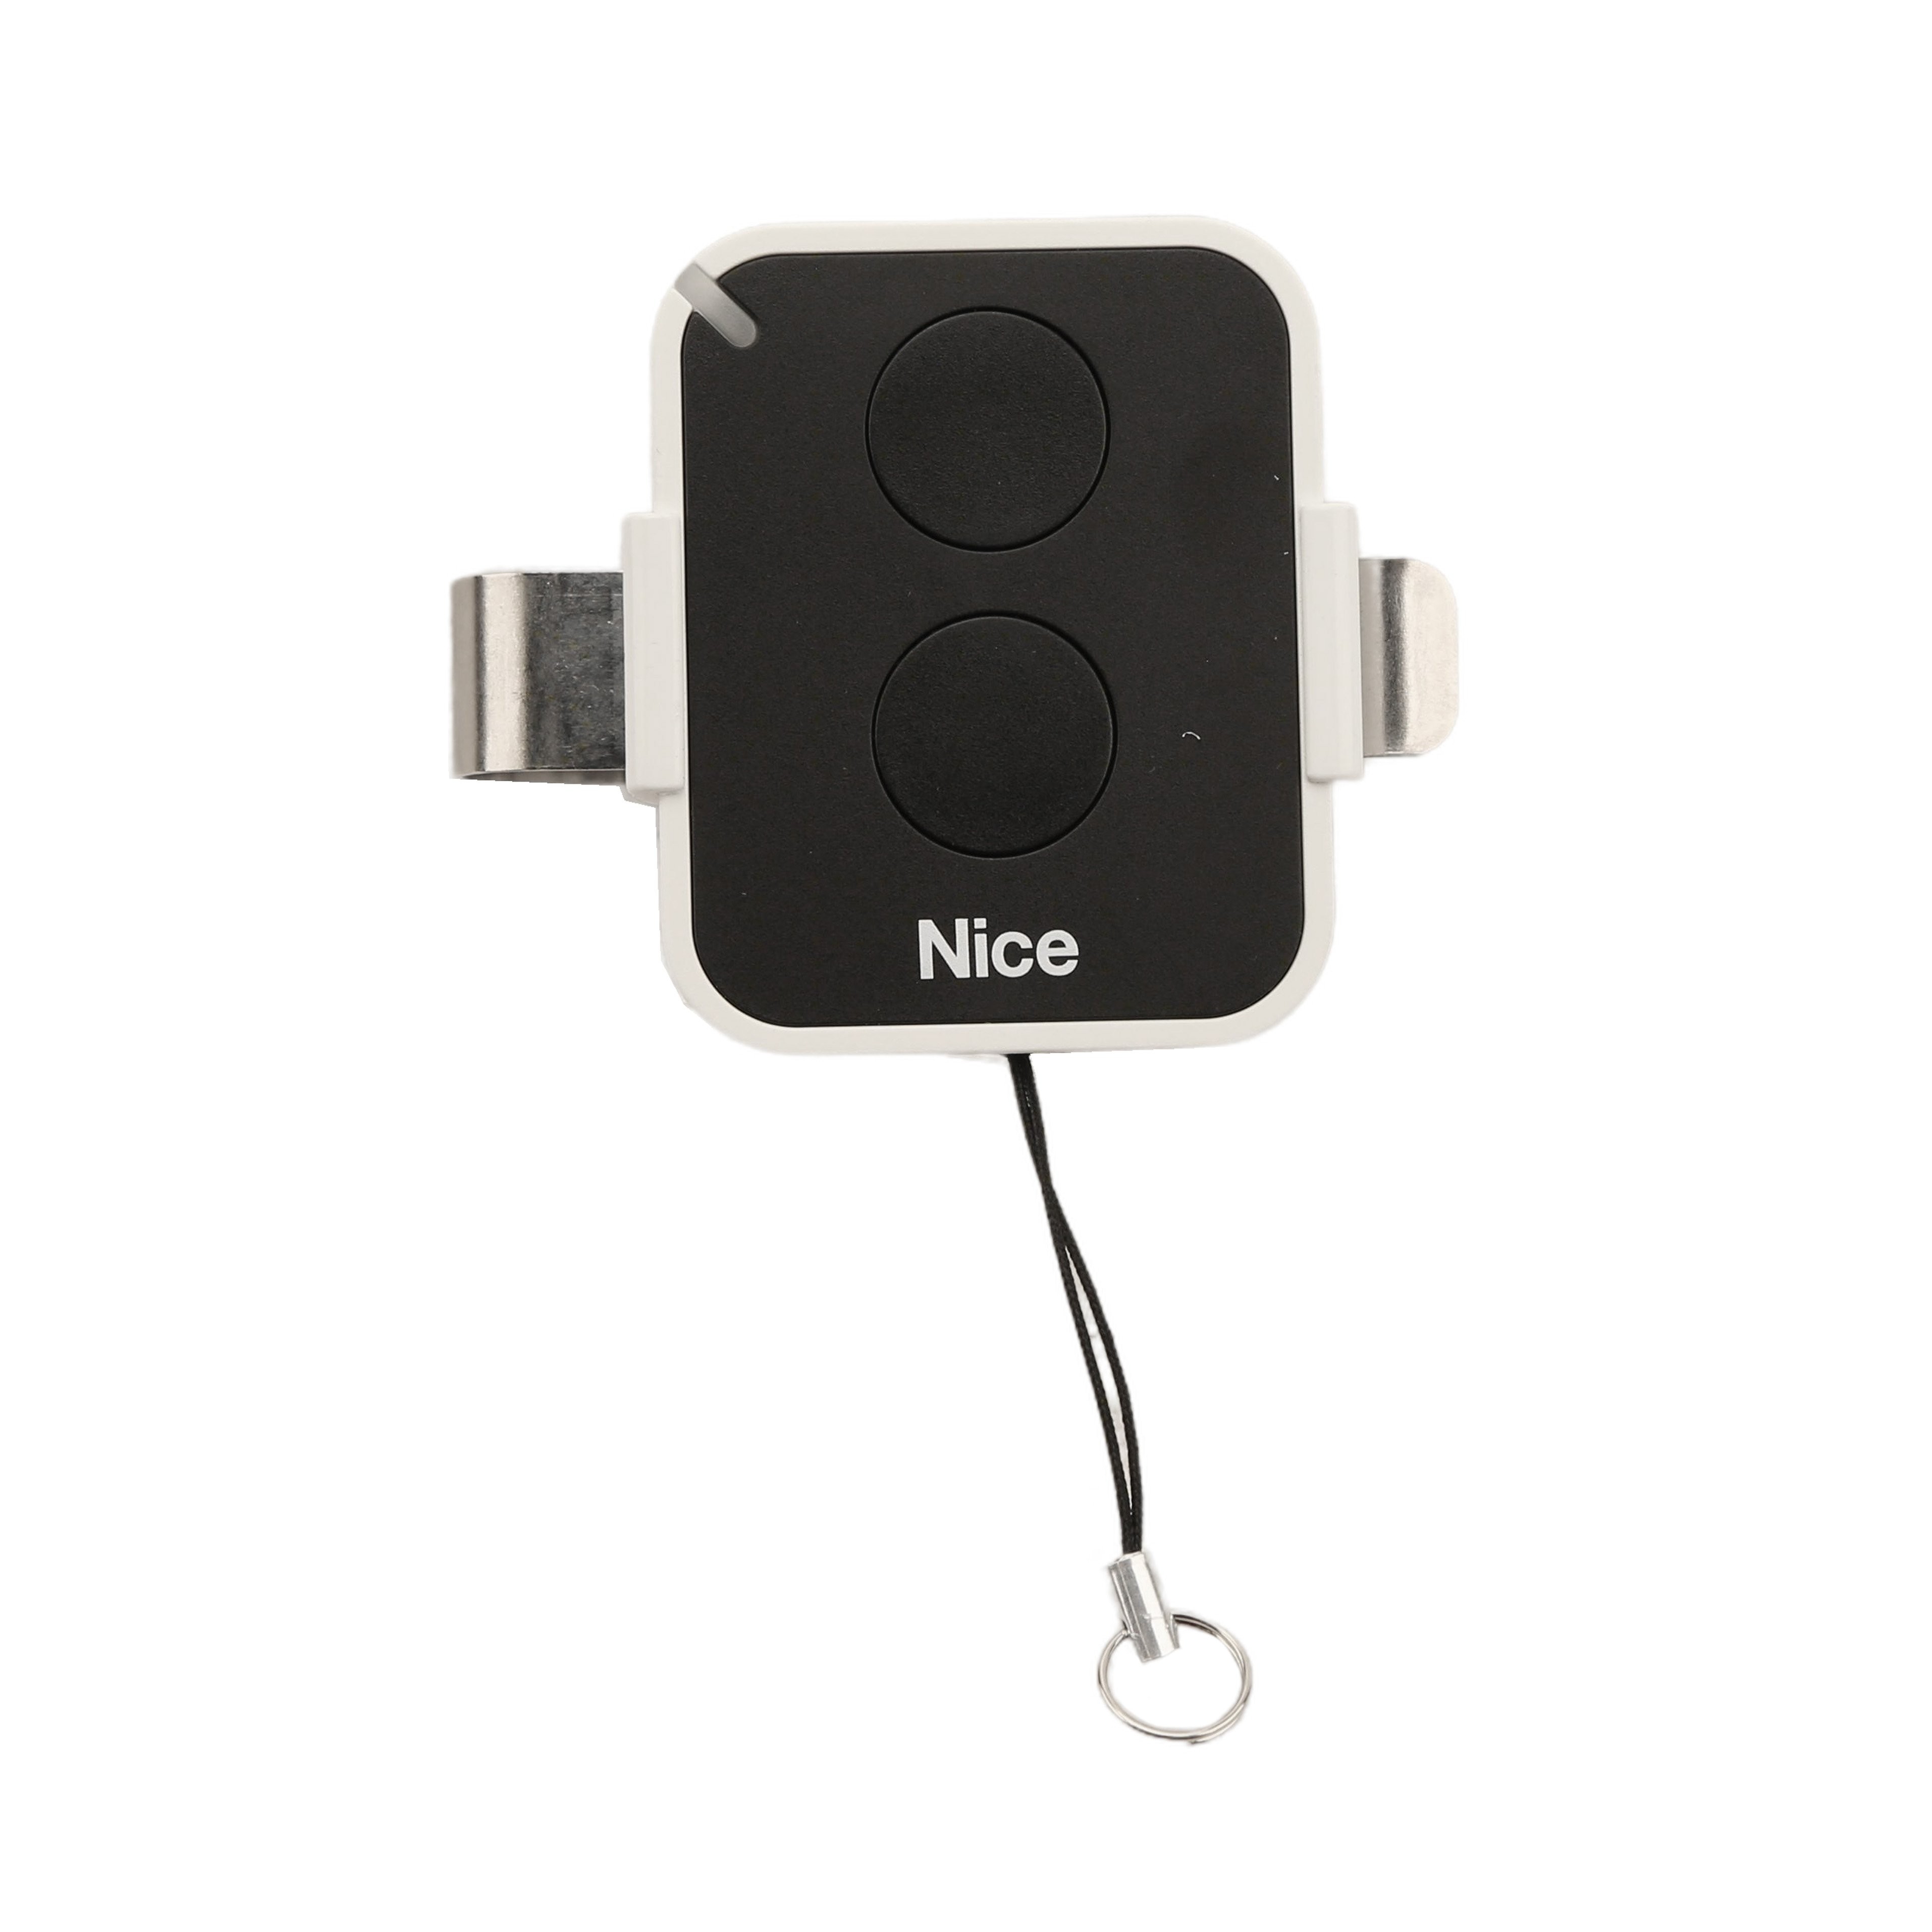 NICE Garage door opener remote - Gate remote